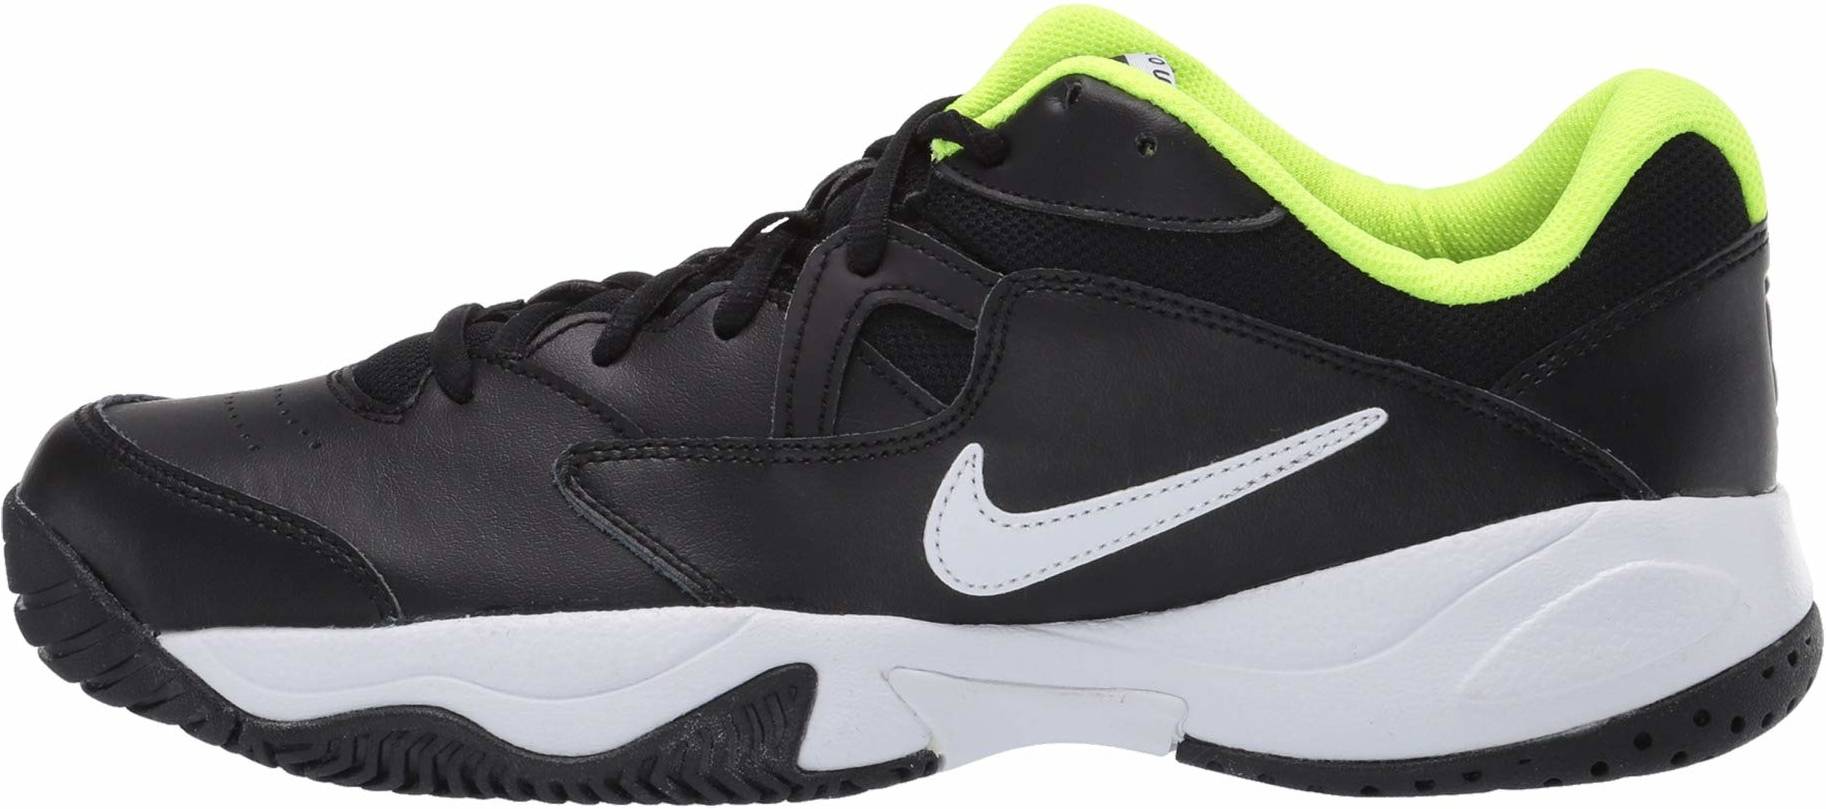 nike court lite black tennis shoes